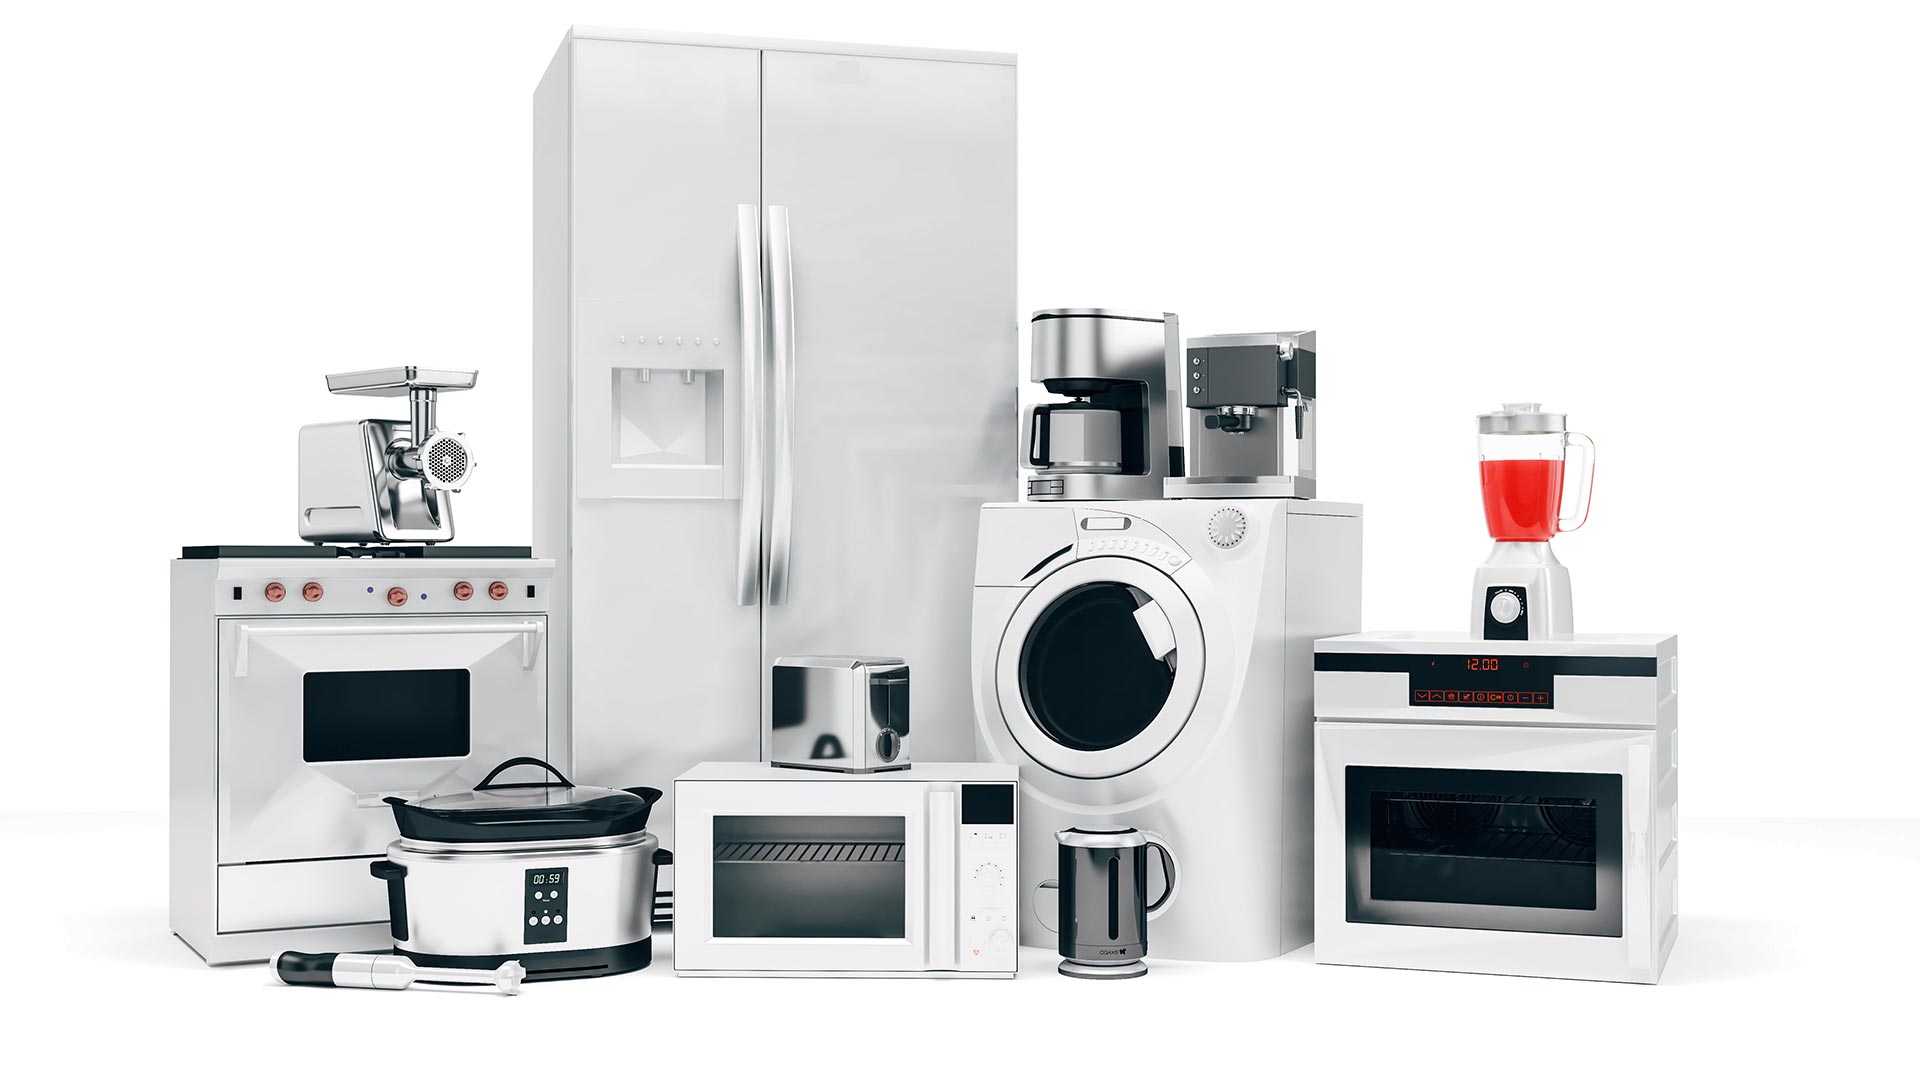 https://www.kitchen-retro.com/wp-content/uploads/2021/07/Home-Appliances.jpg